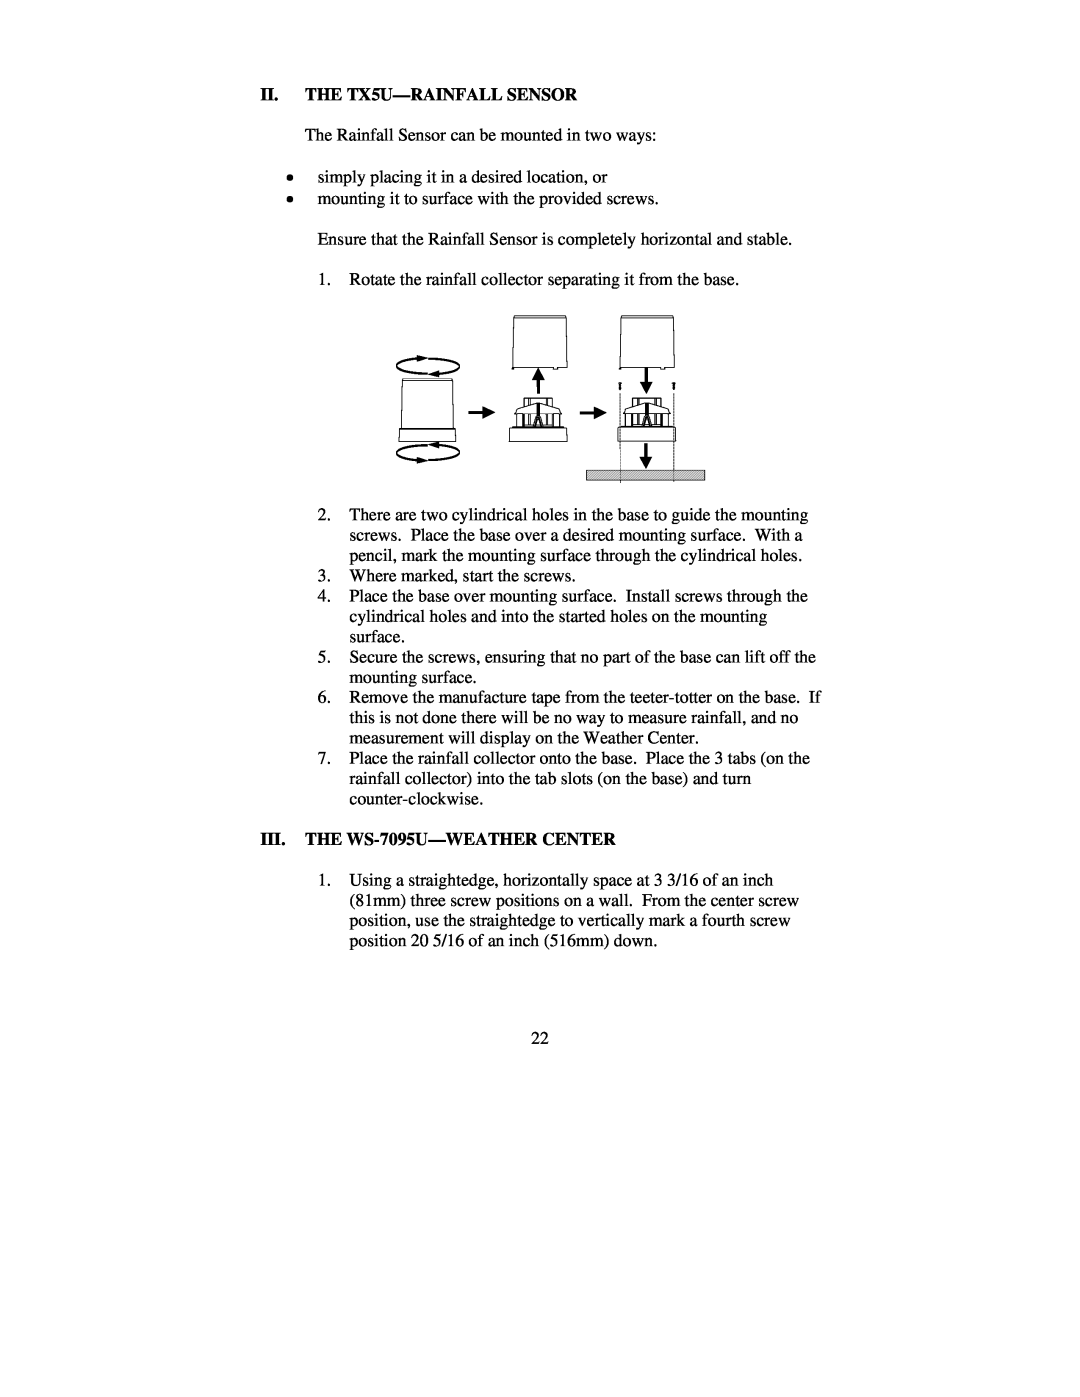 La Crosse Technology TX4U instruction manual II. THE TX5U-RAINFALL SENSOR, III. THE WS-7095U-WEATHER CENTER 